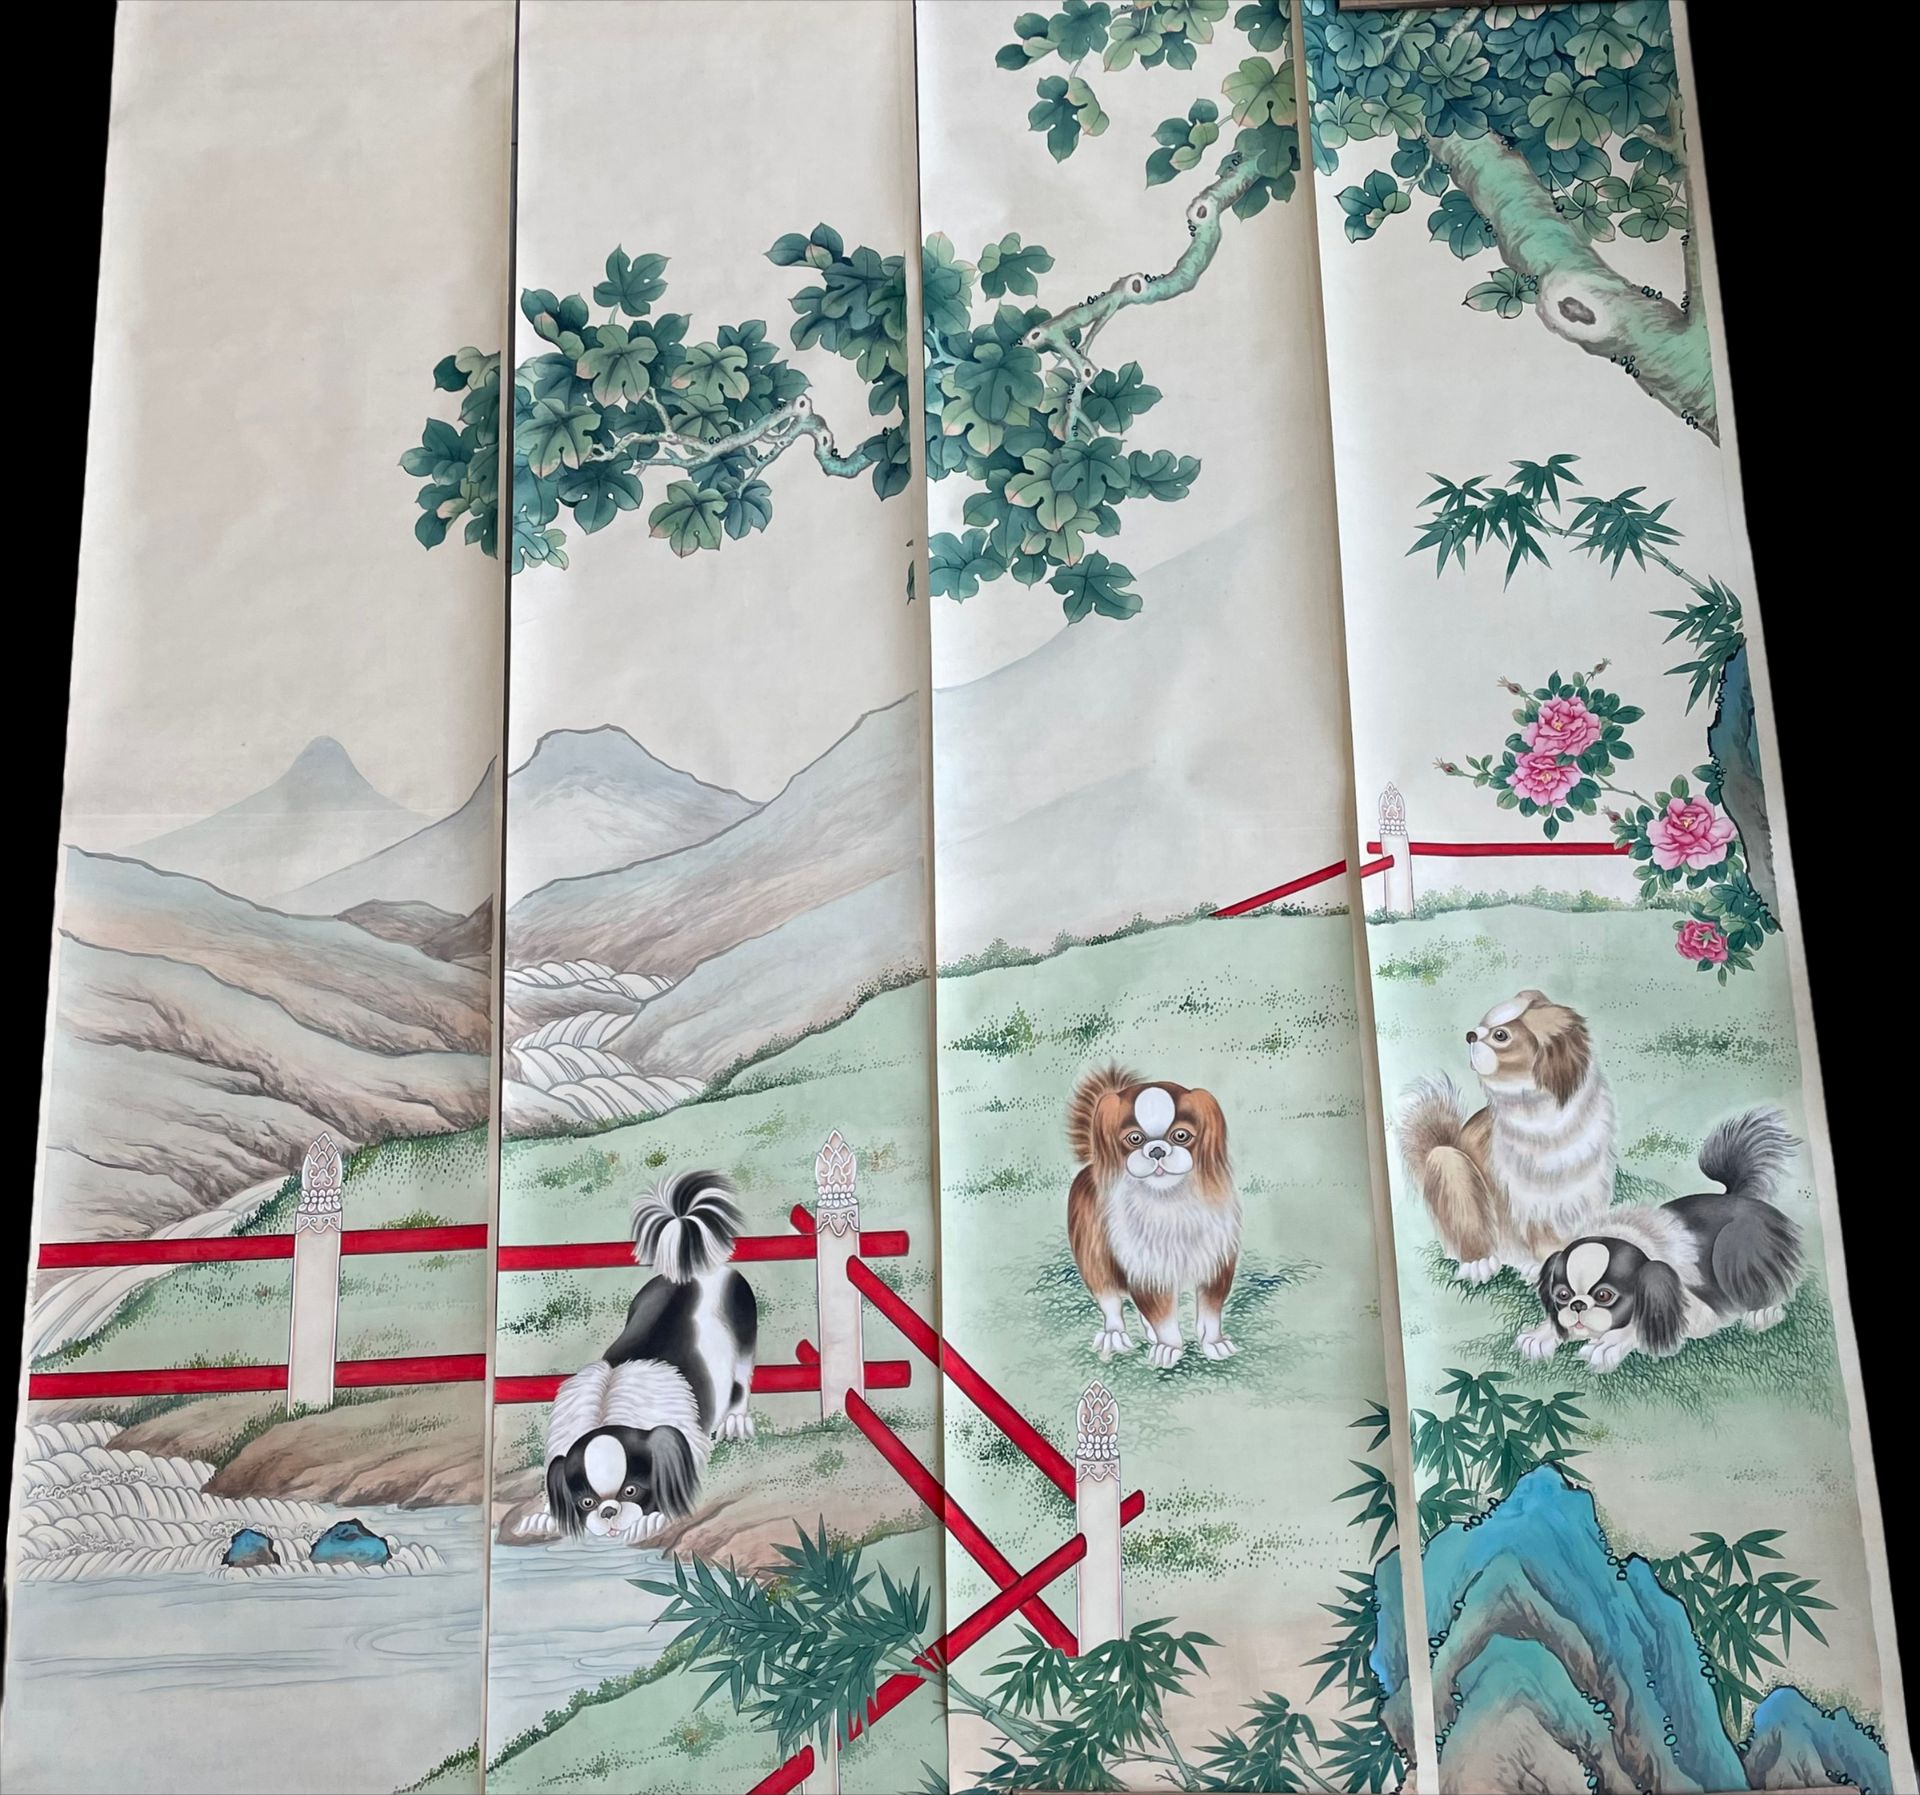 Painting on scroll. China with Pekingese decor.